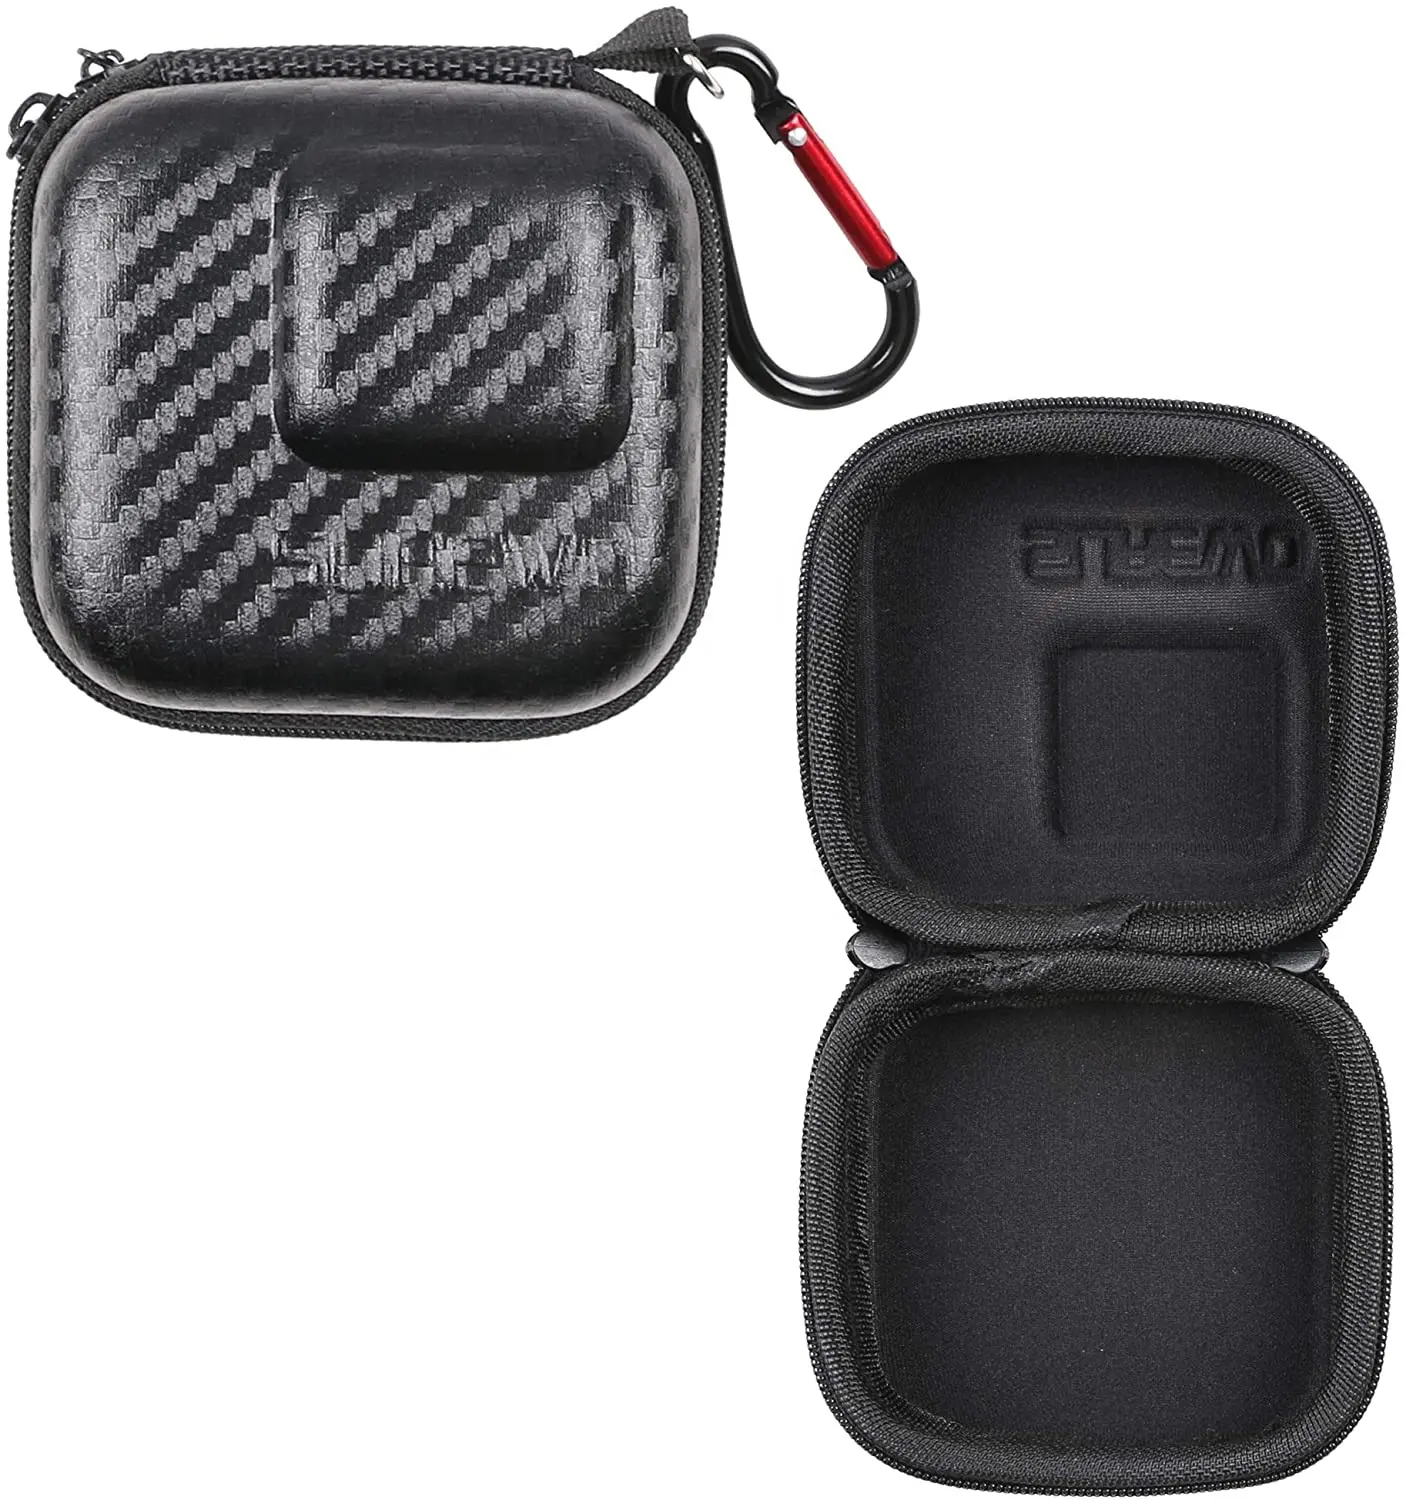 Waterproof Hard Case Pocket Shell Black Mini Carrying Case Travel Portable Storage Bag for GoPro DJI OSMO Action Camer